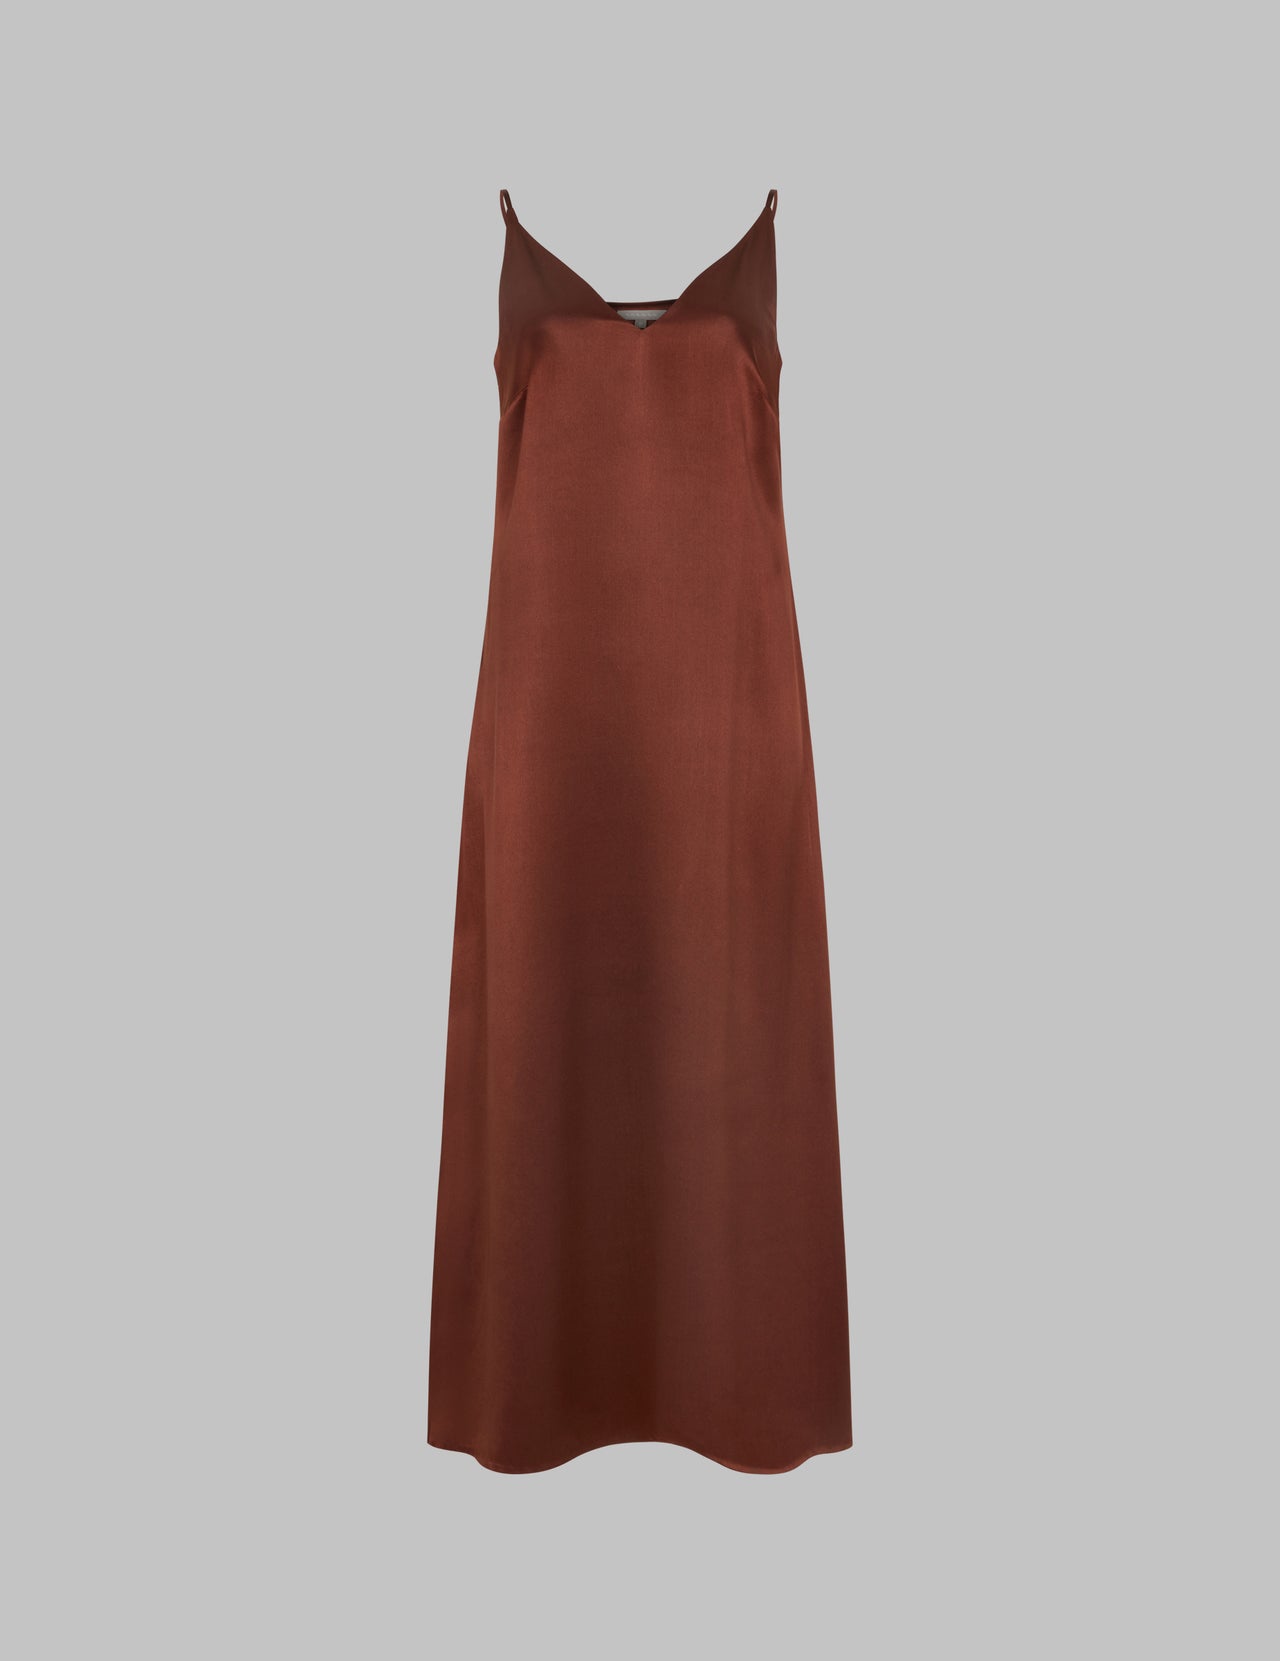  Brown Silk Satin Slip Dress 